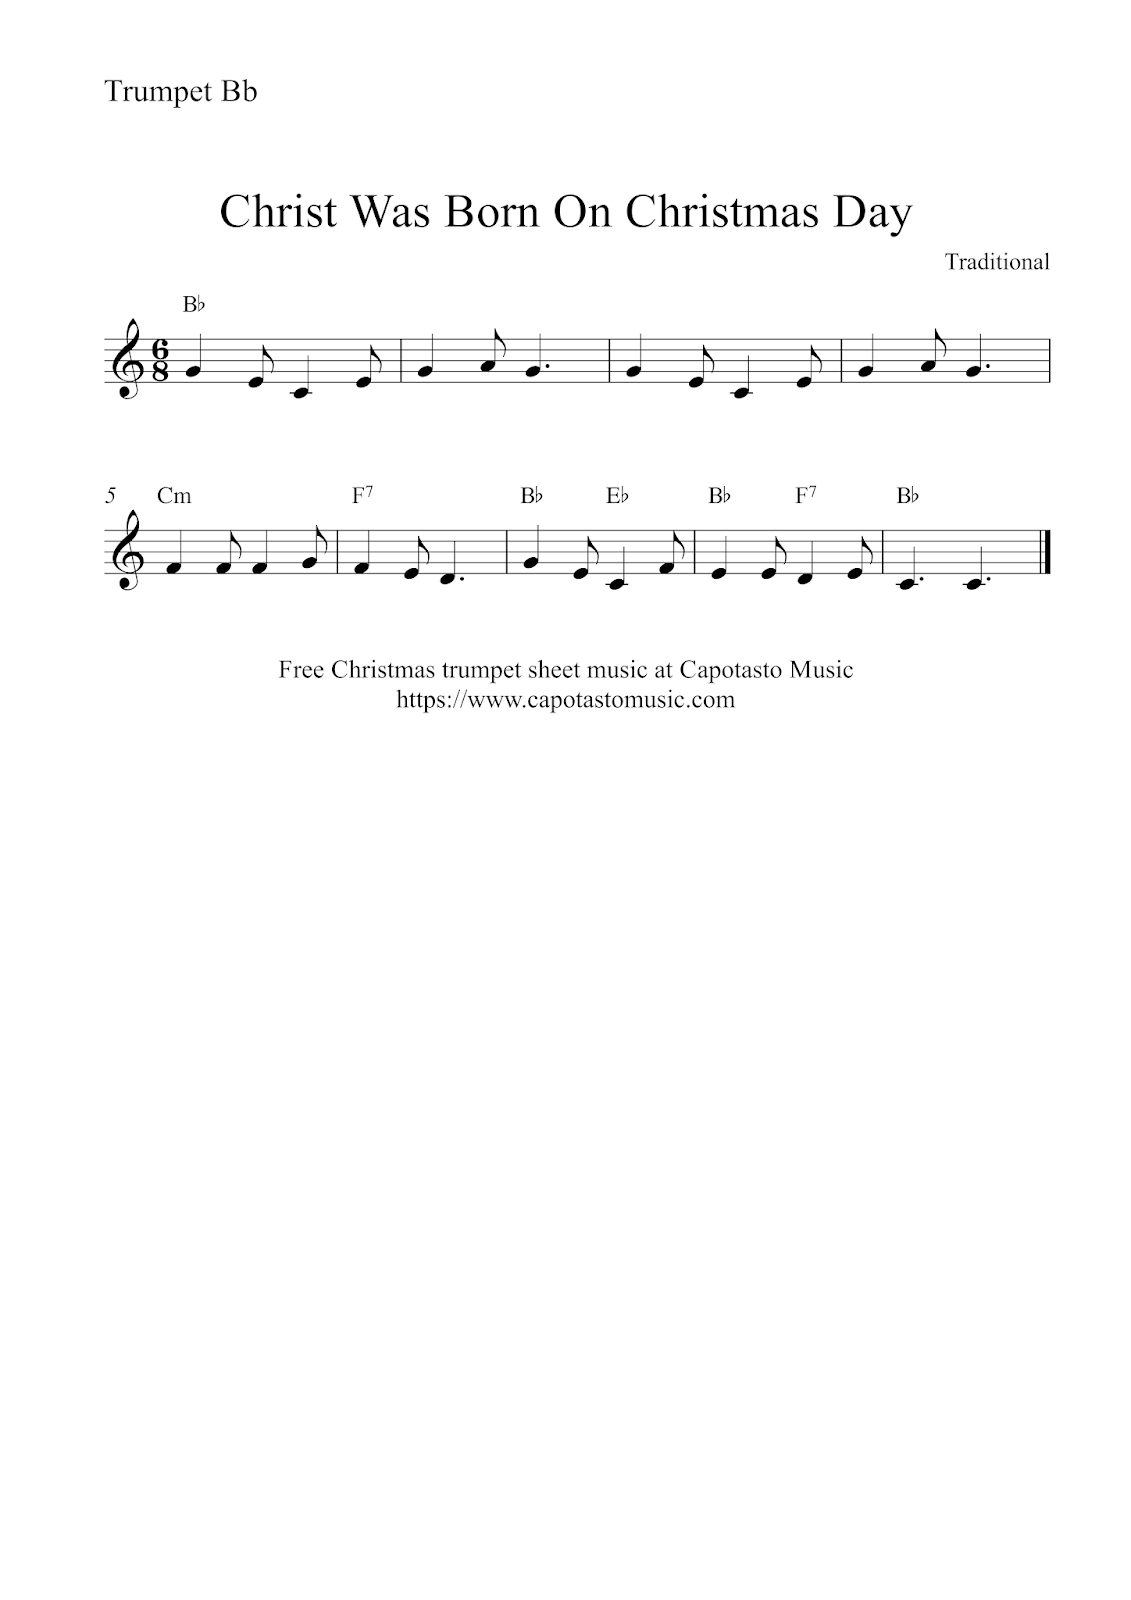 Christmas Trumpet Sheet Music Free Printable - Free Printable Templates